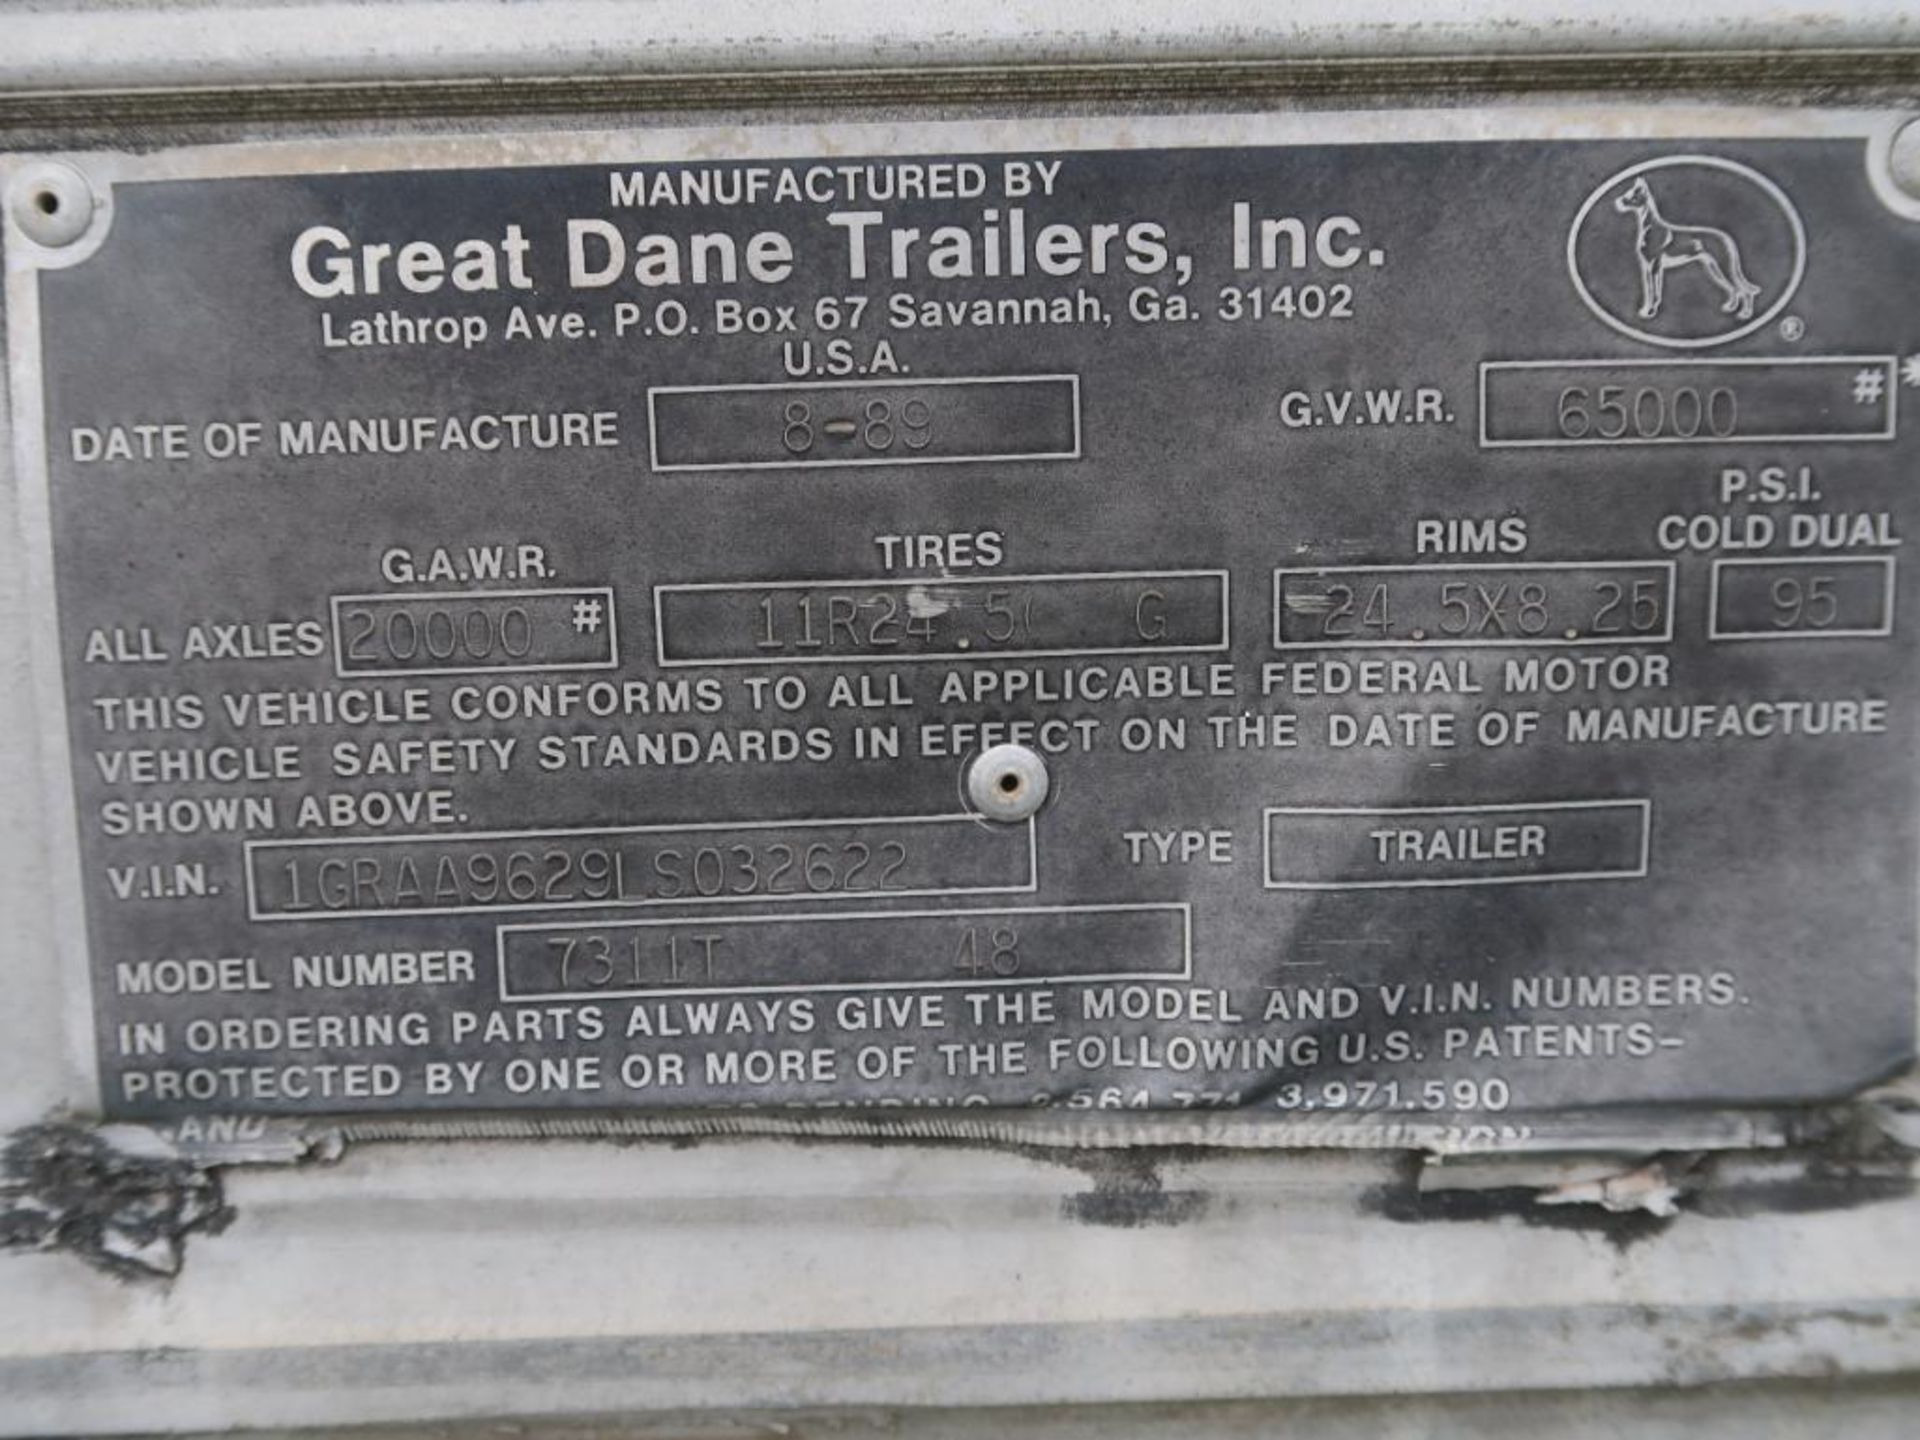 1989 Great Dane 48 ft. Sliding Tandem-Axle Box Trailer Model 7311T-48, VIN 1GRAA9629LS032622, Double - Image 3 of 3